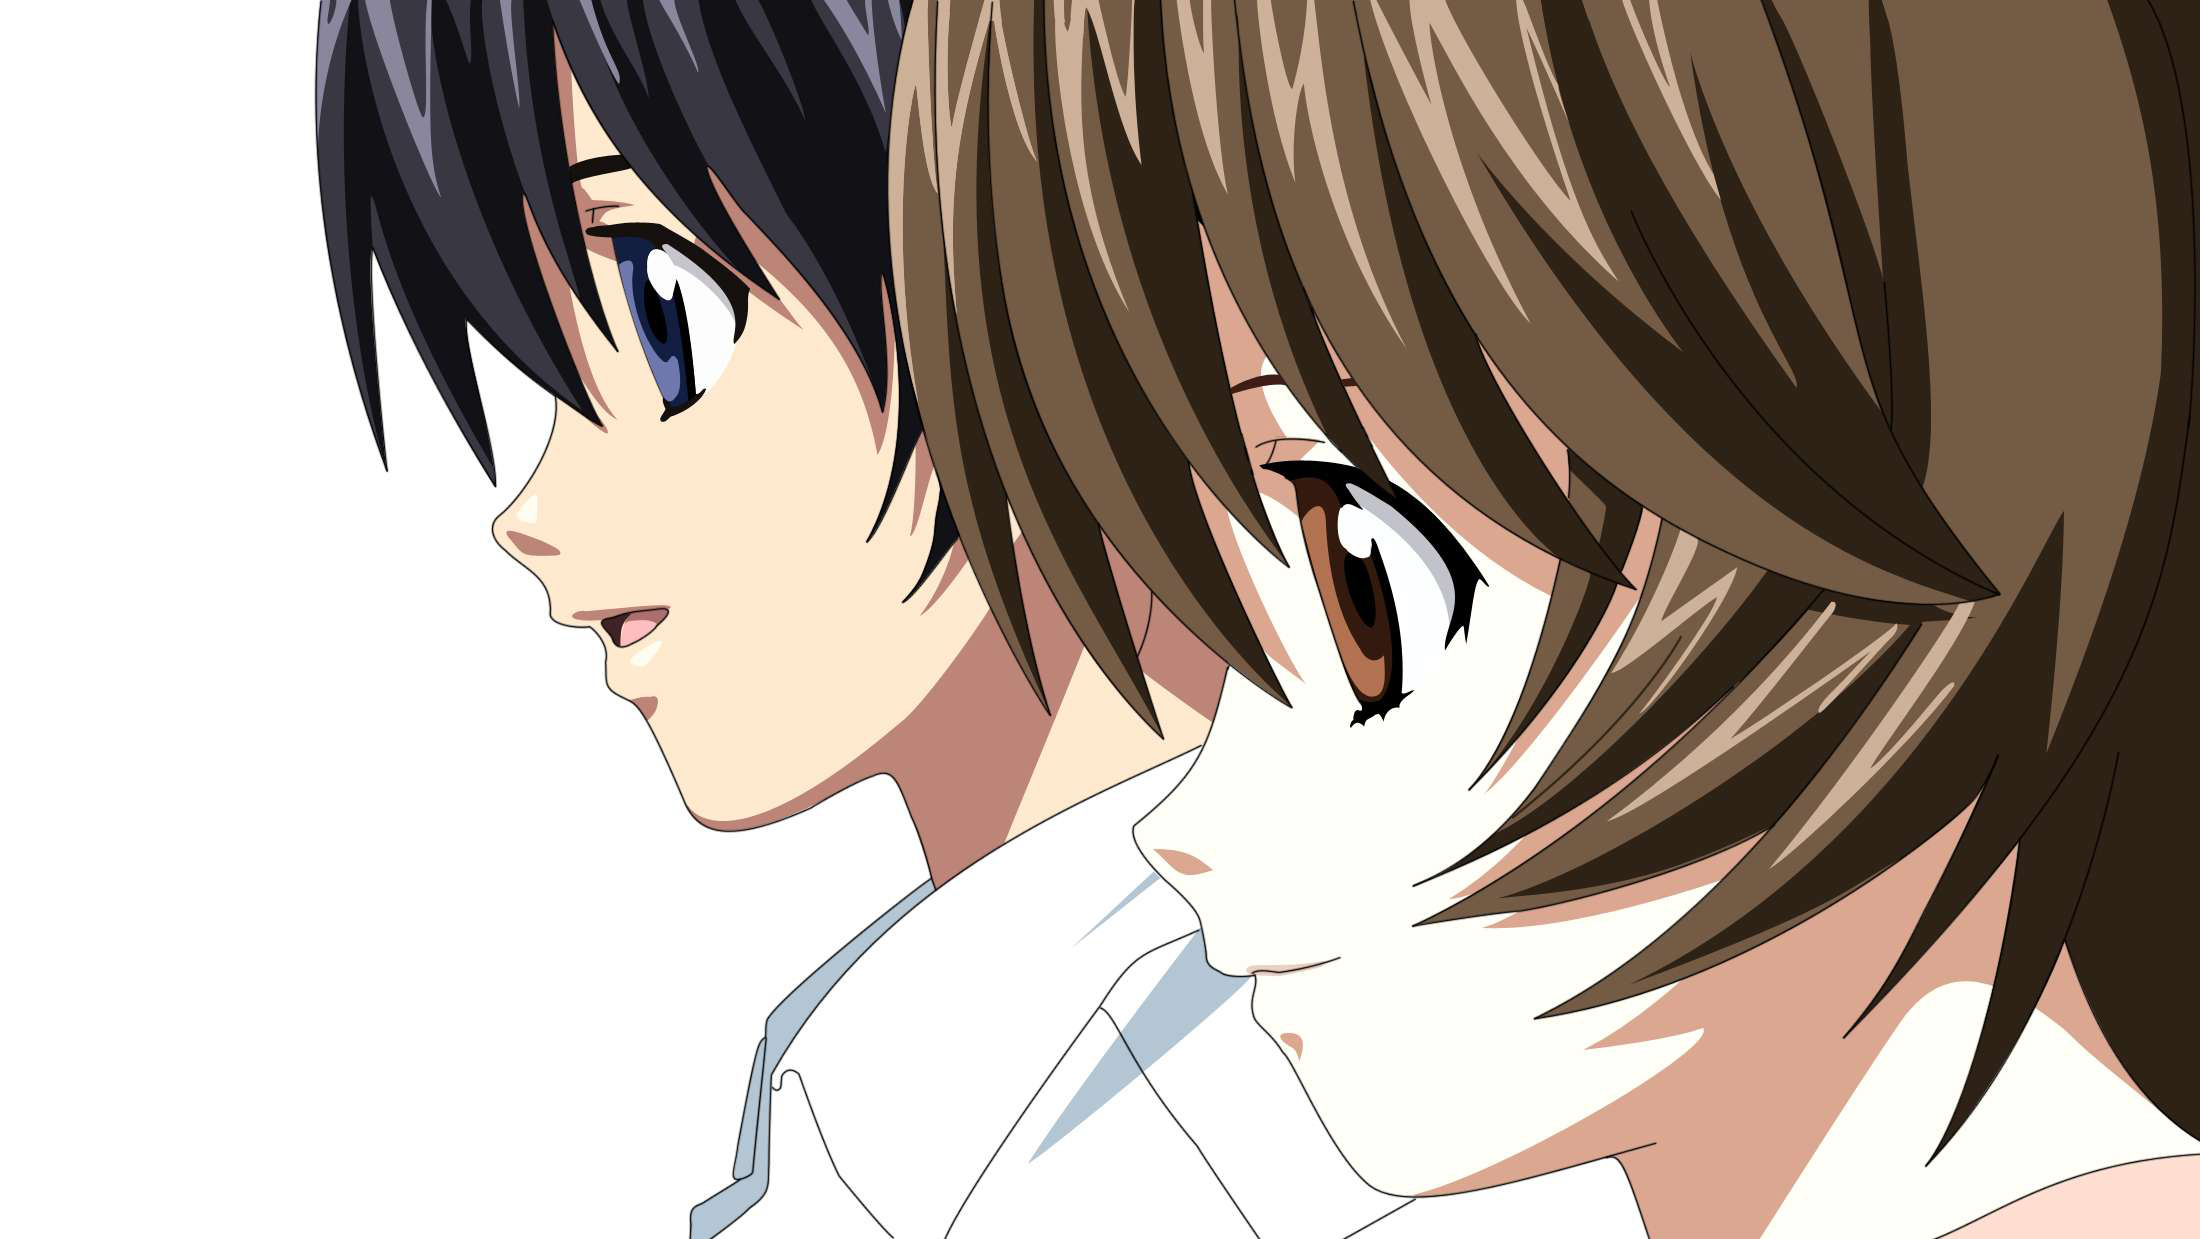 Elfen Lied characters Kouta and Yuka in an anime desktop wallpaper.